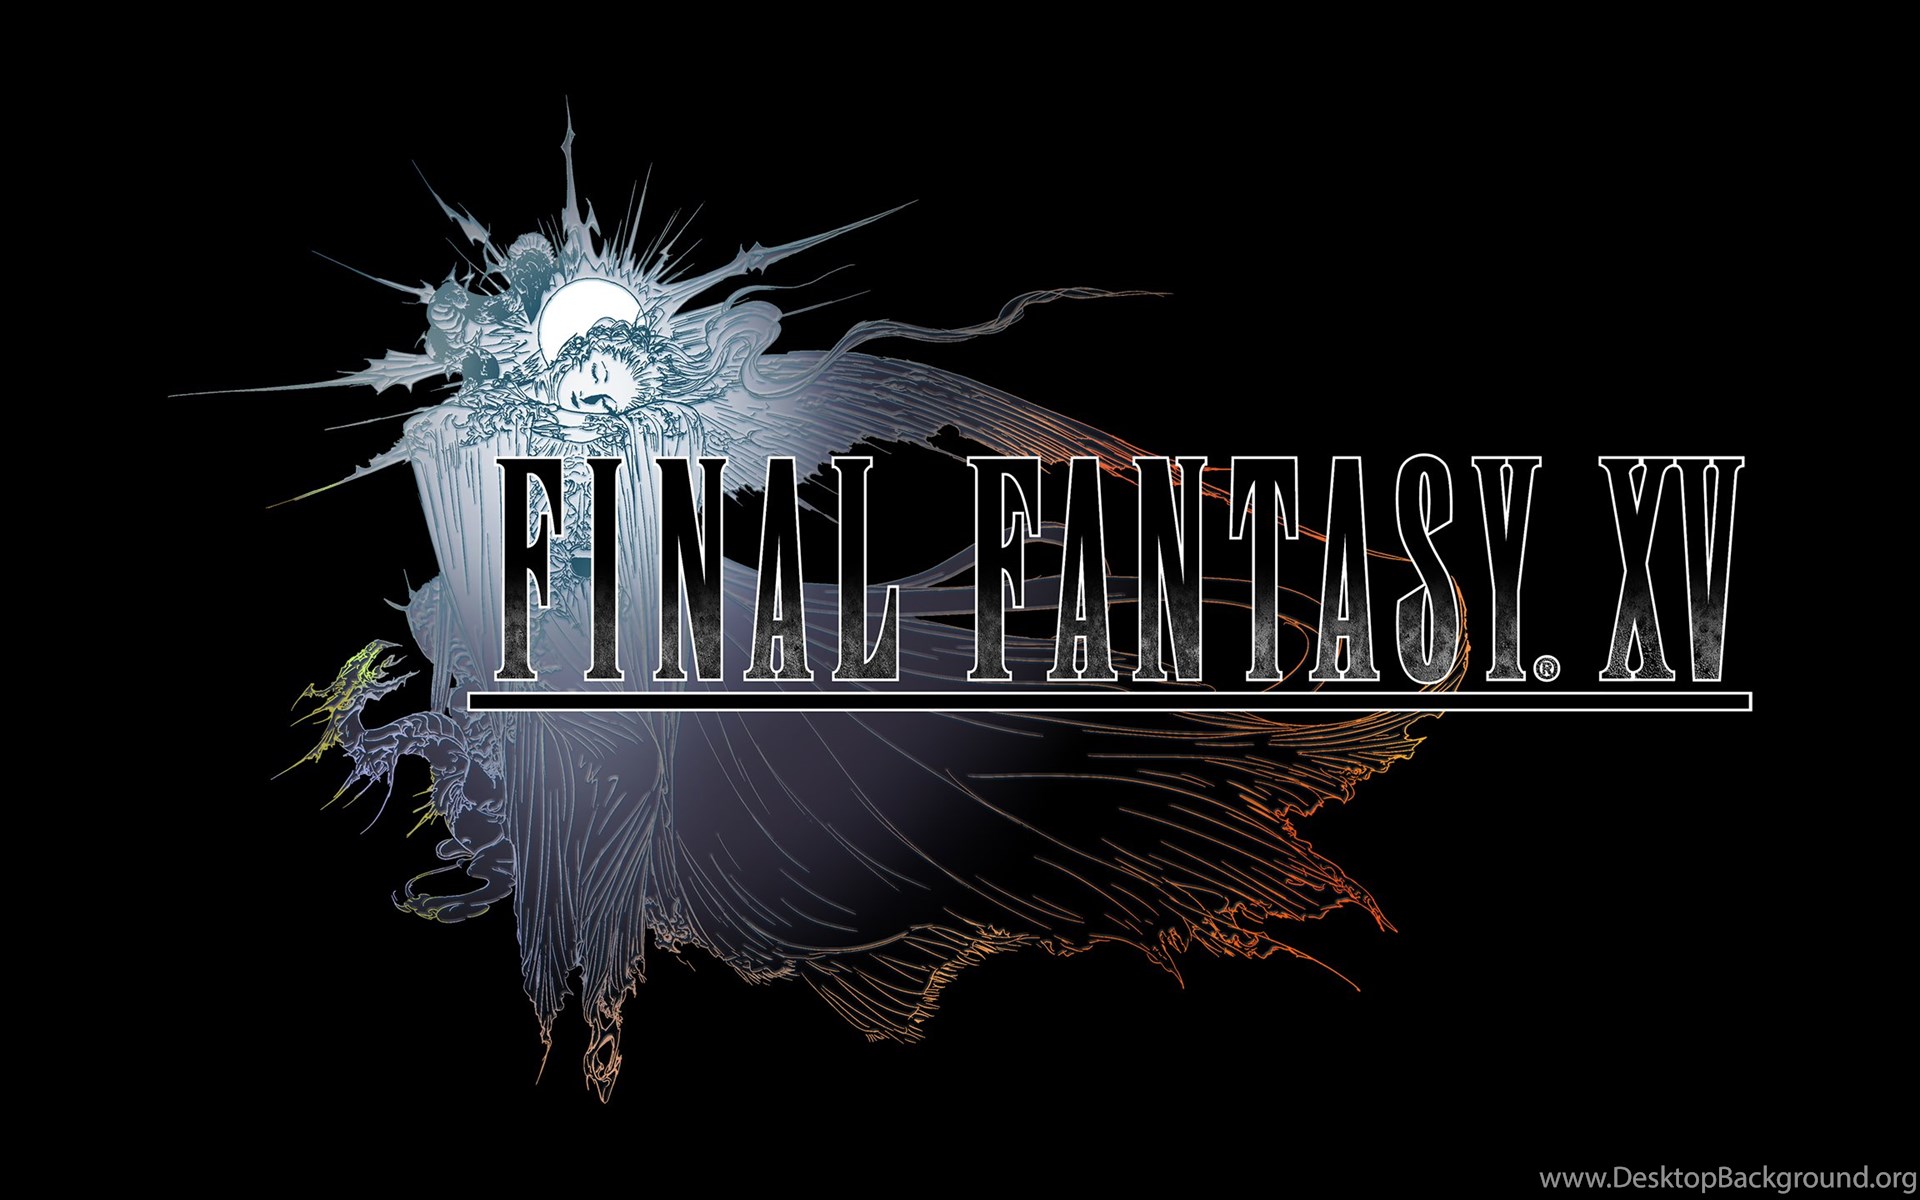 Final Fantasy XV Game Logo Wallpaper 2560x144. 855 Desktop Background